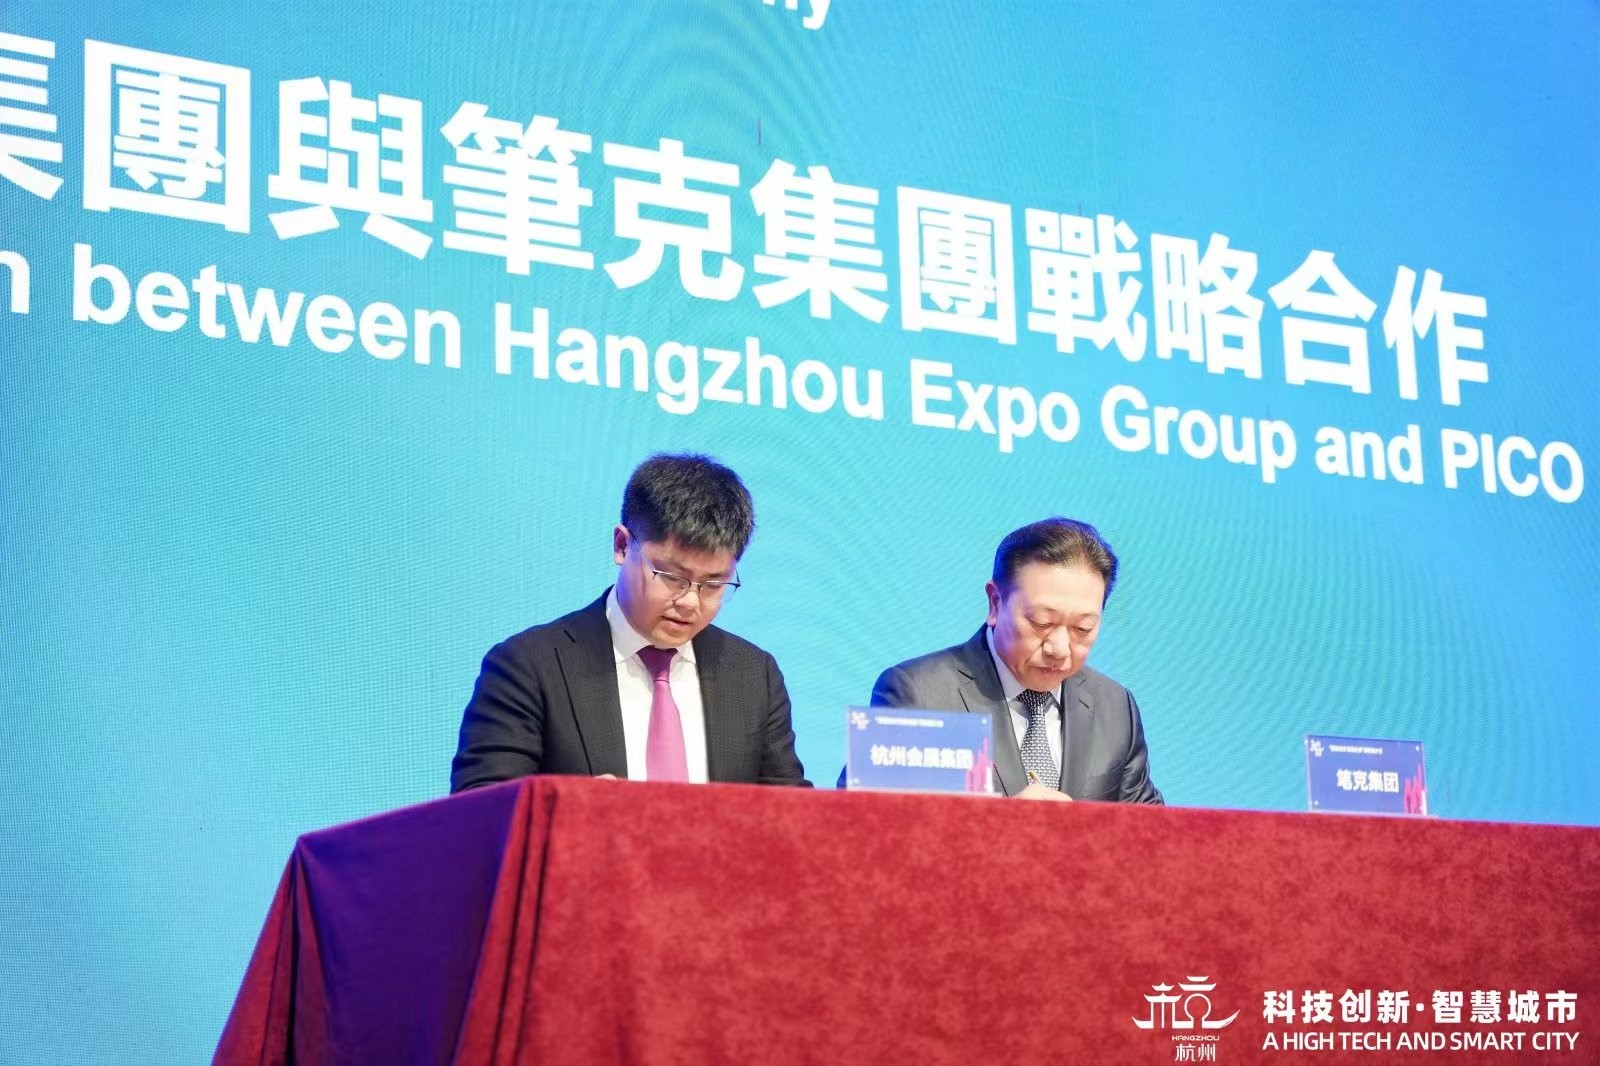 Pico and Hangzhou Expo Group signed strategic alliance